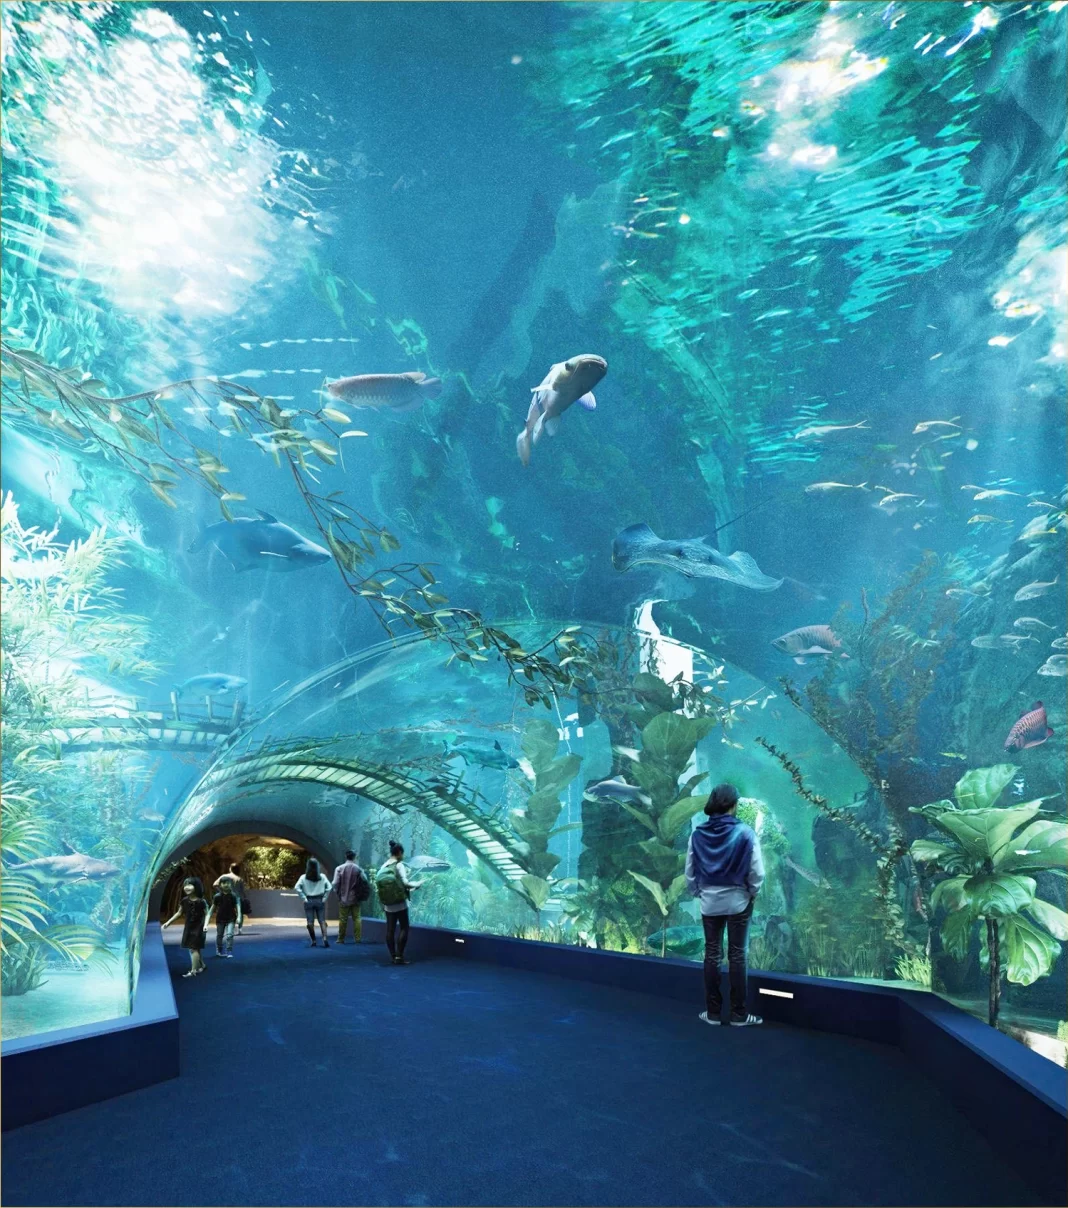 Thủy cung Lotte World Hà Nội | Lotte World Aquarium Hanoi